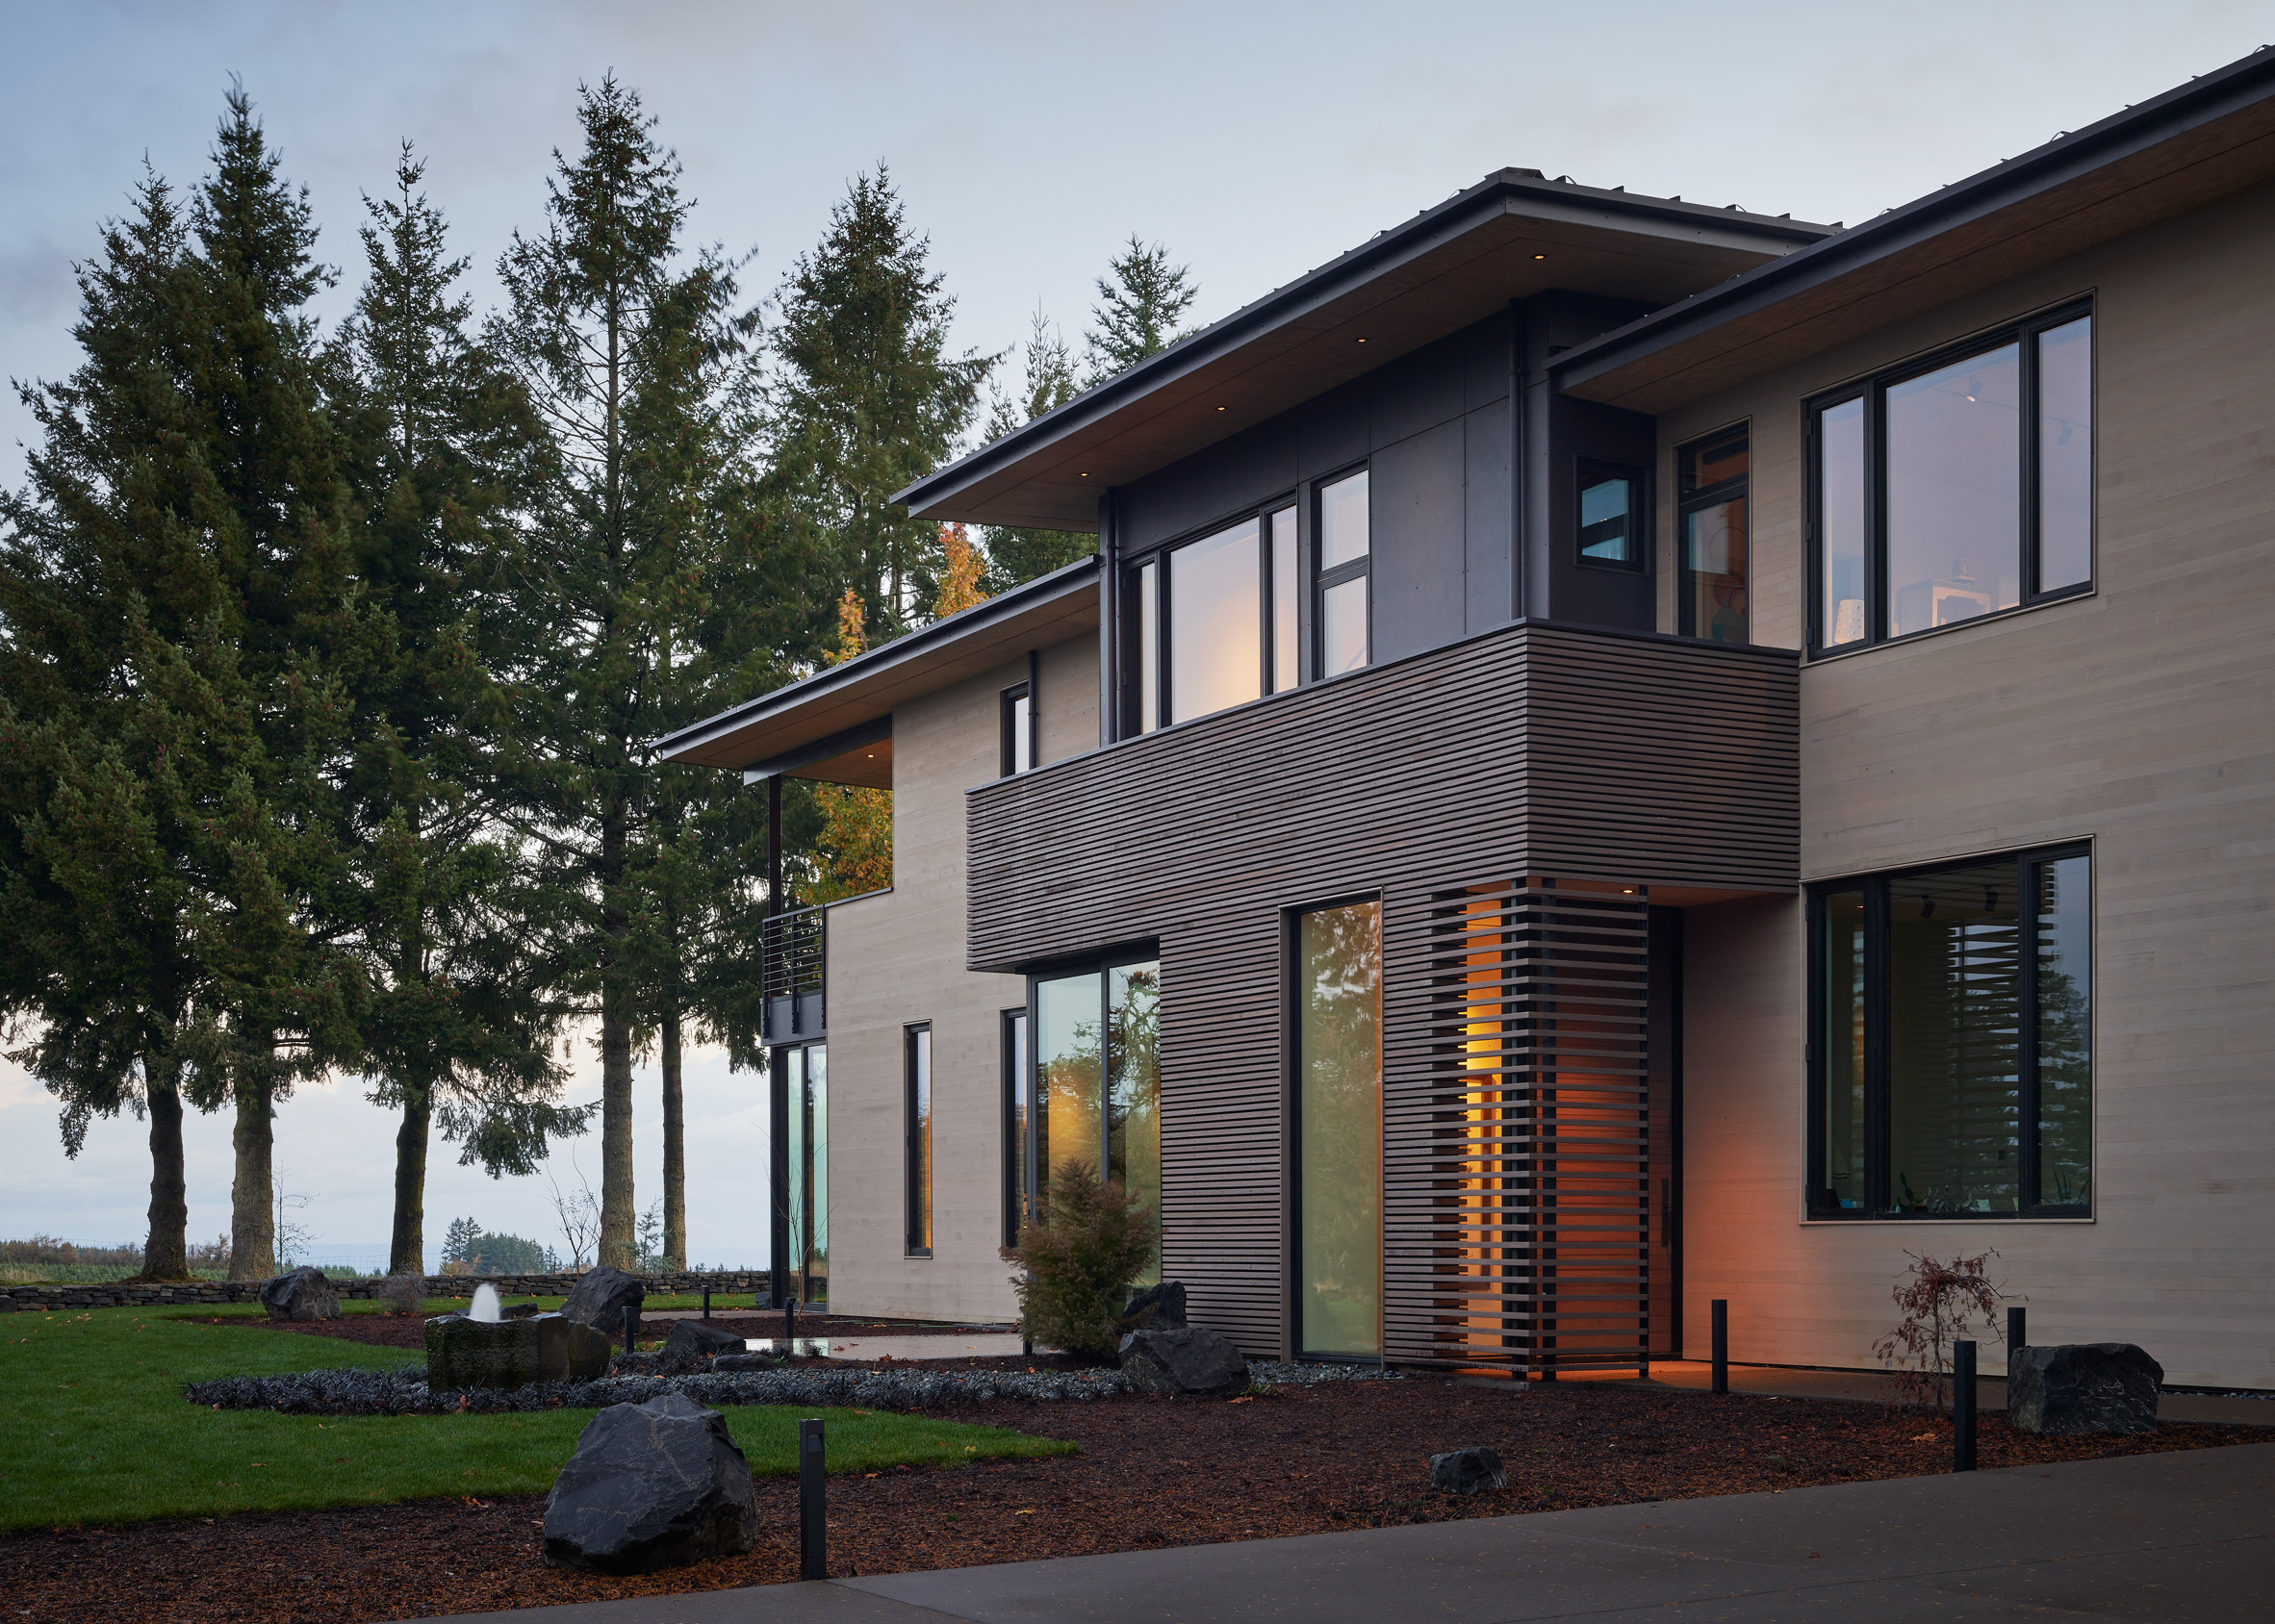 Cedar-clad rectilinear house in Oregon by Ueda Design Studio